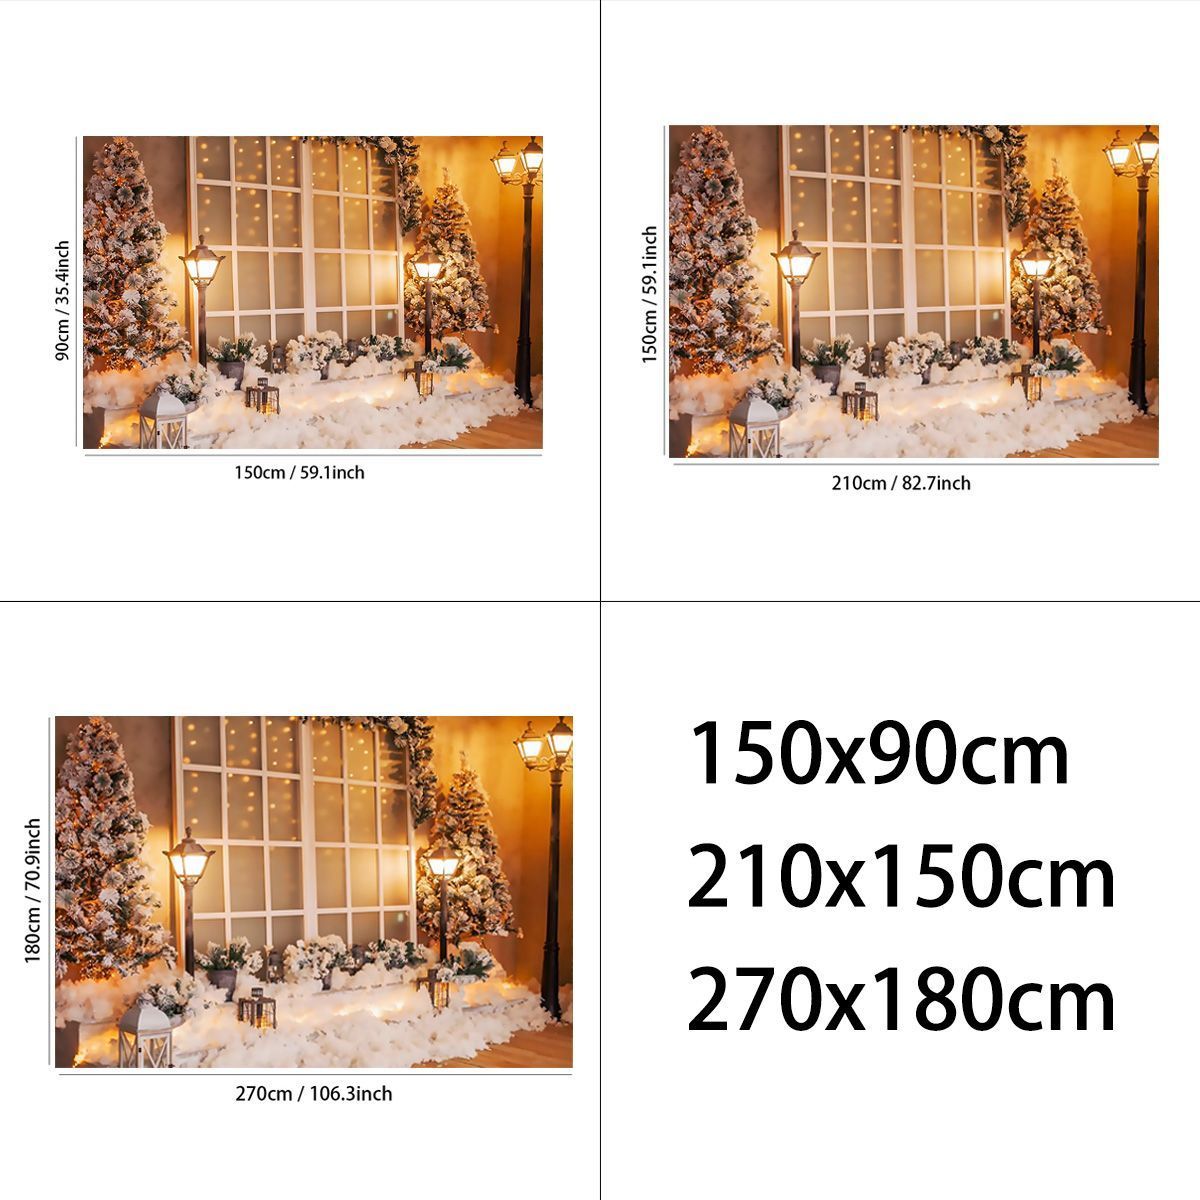 09x15m-15x21m-18x27m-Christmas-Tree-Photography-Backdrops-Snow-Street-Lamp-Window-Background-Cloth-f-1764507